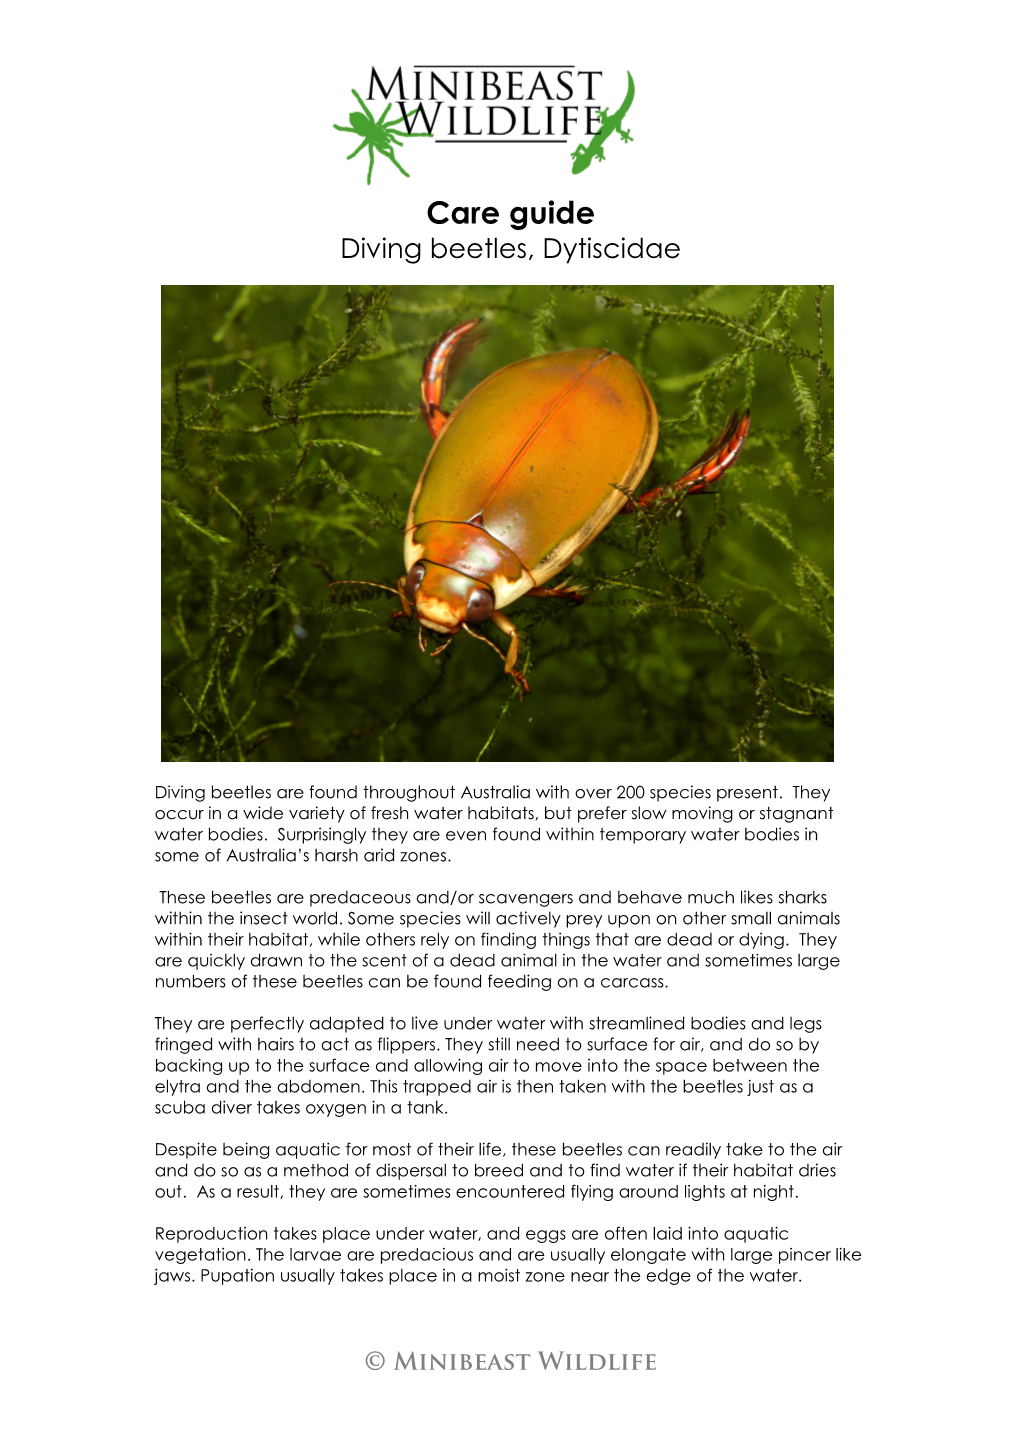 Care Guide Diving Beetles, Dytiscidae